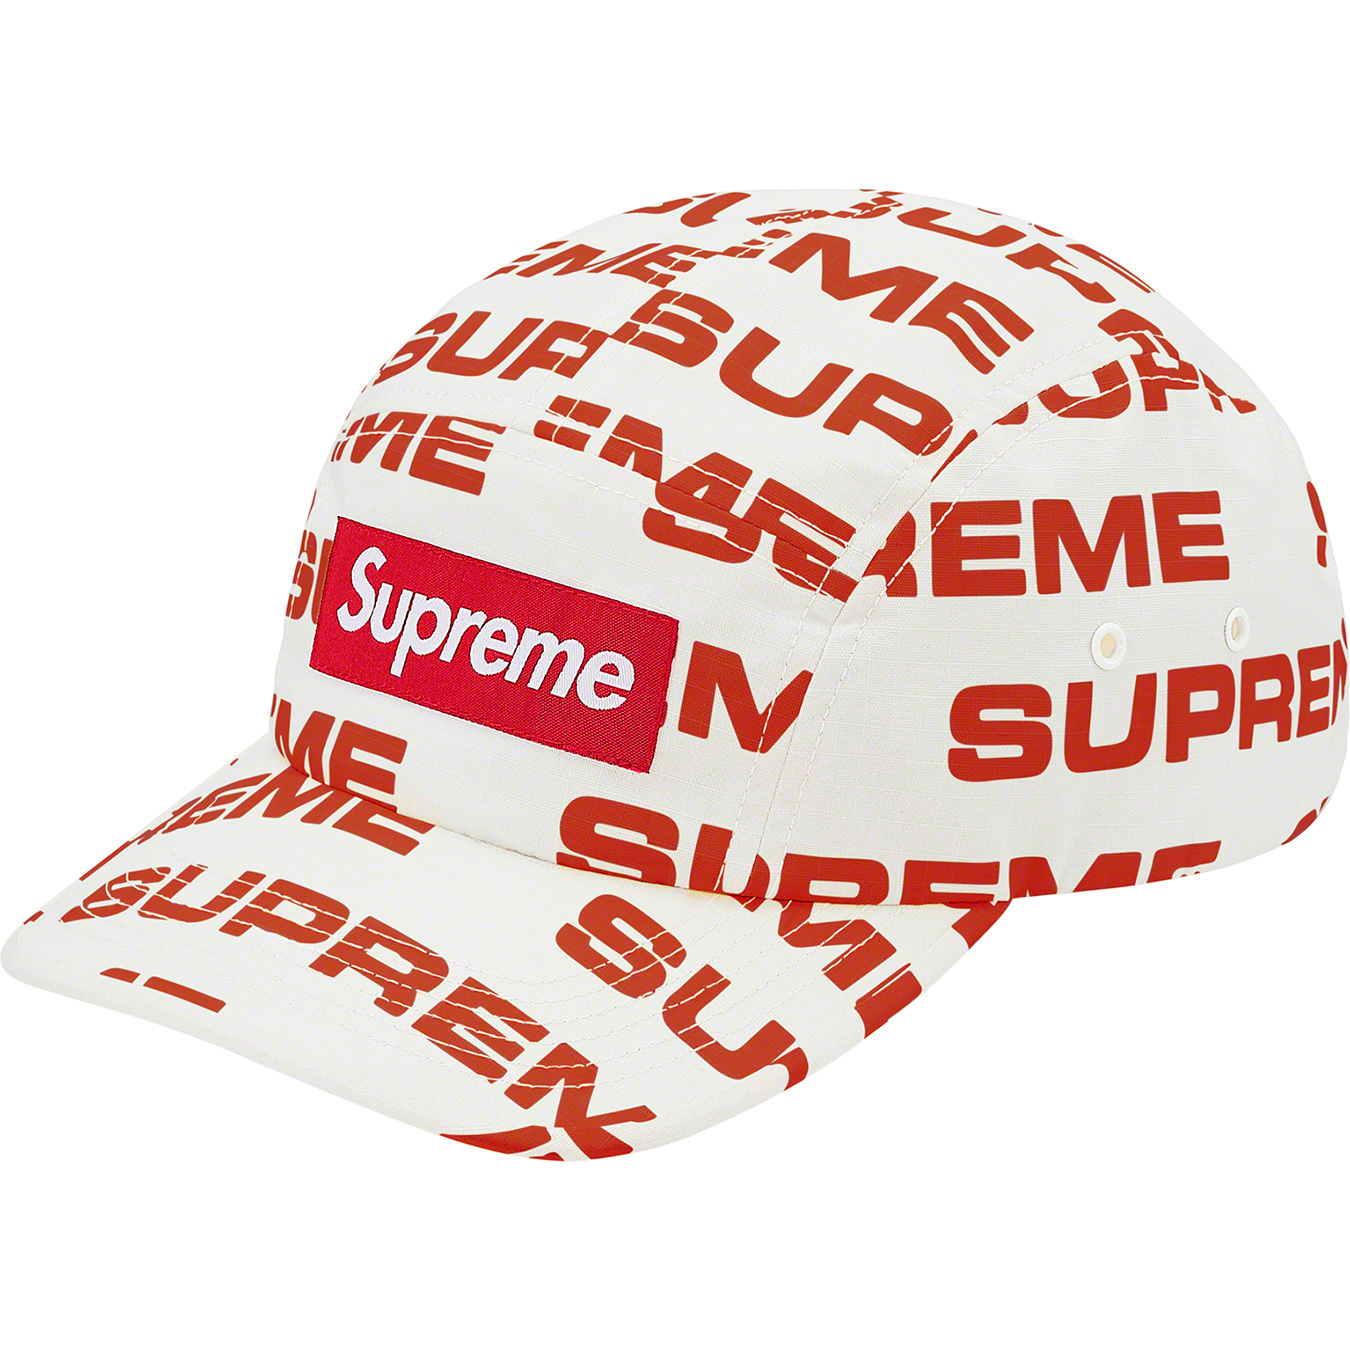 Supreme